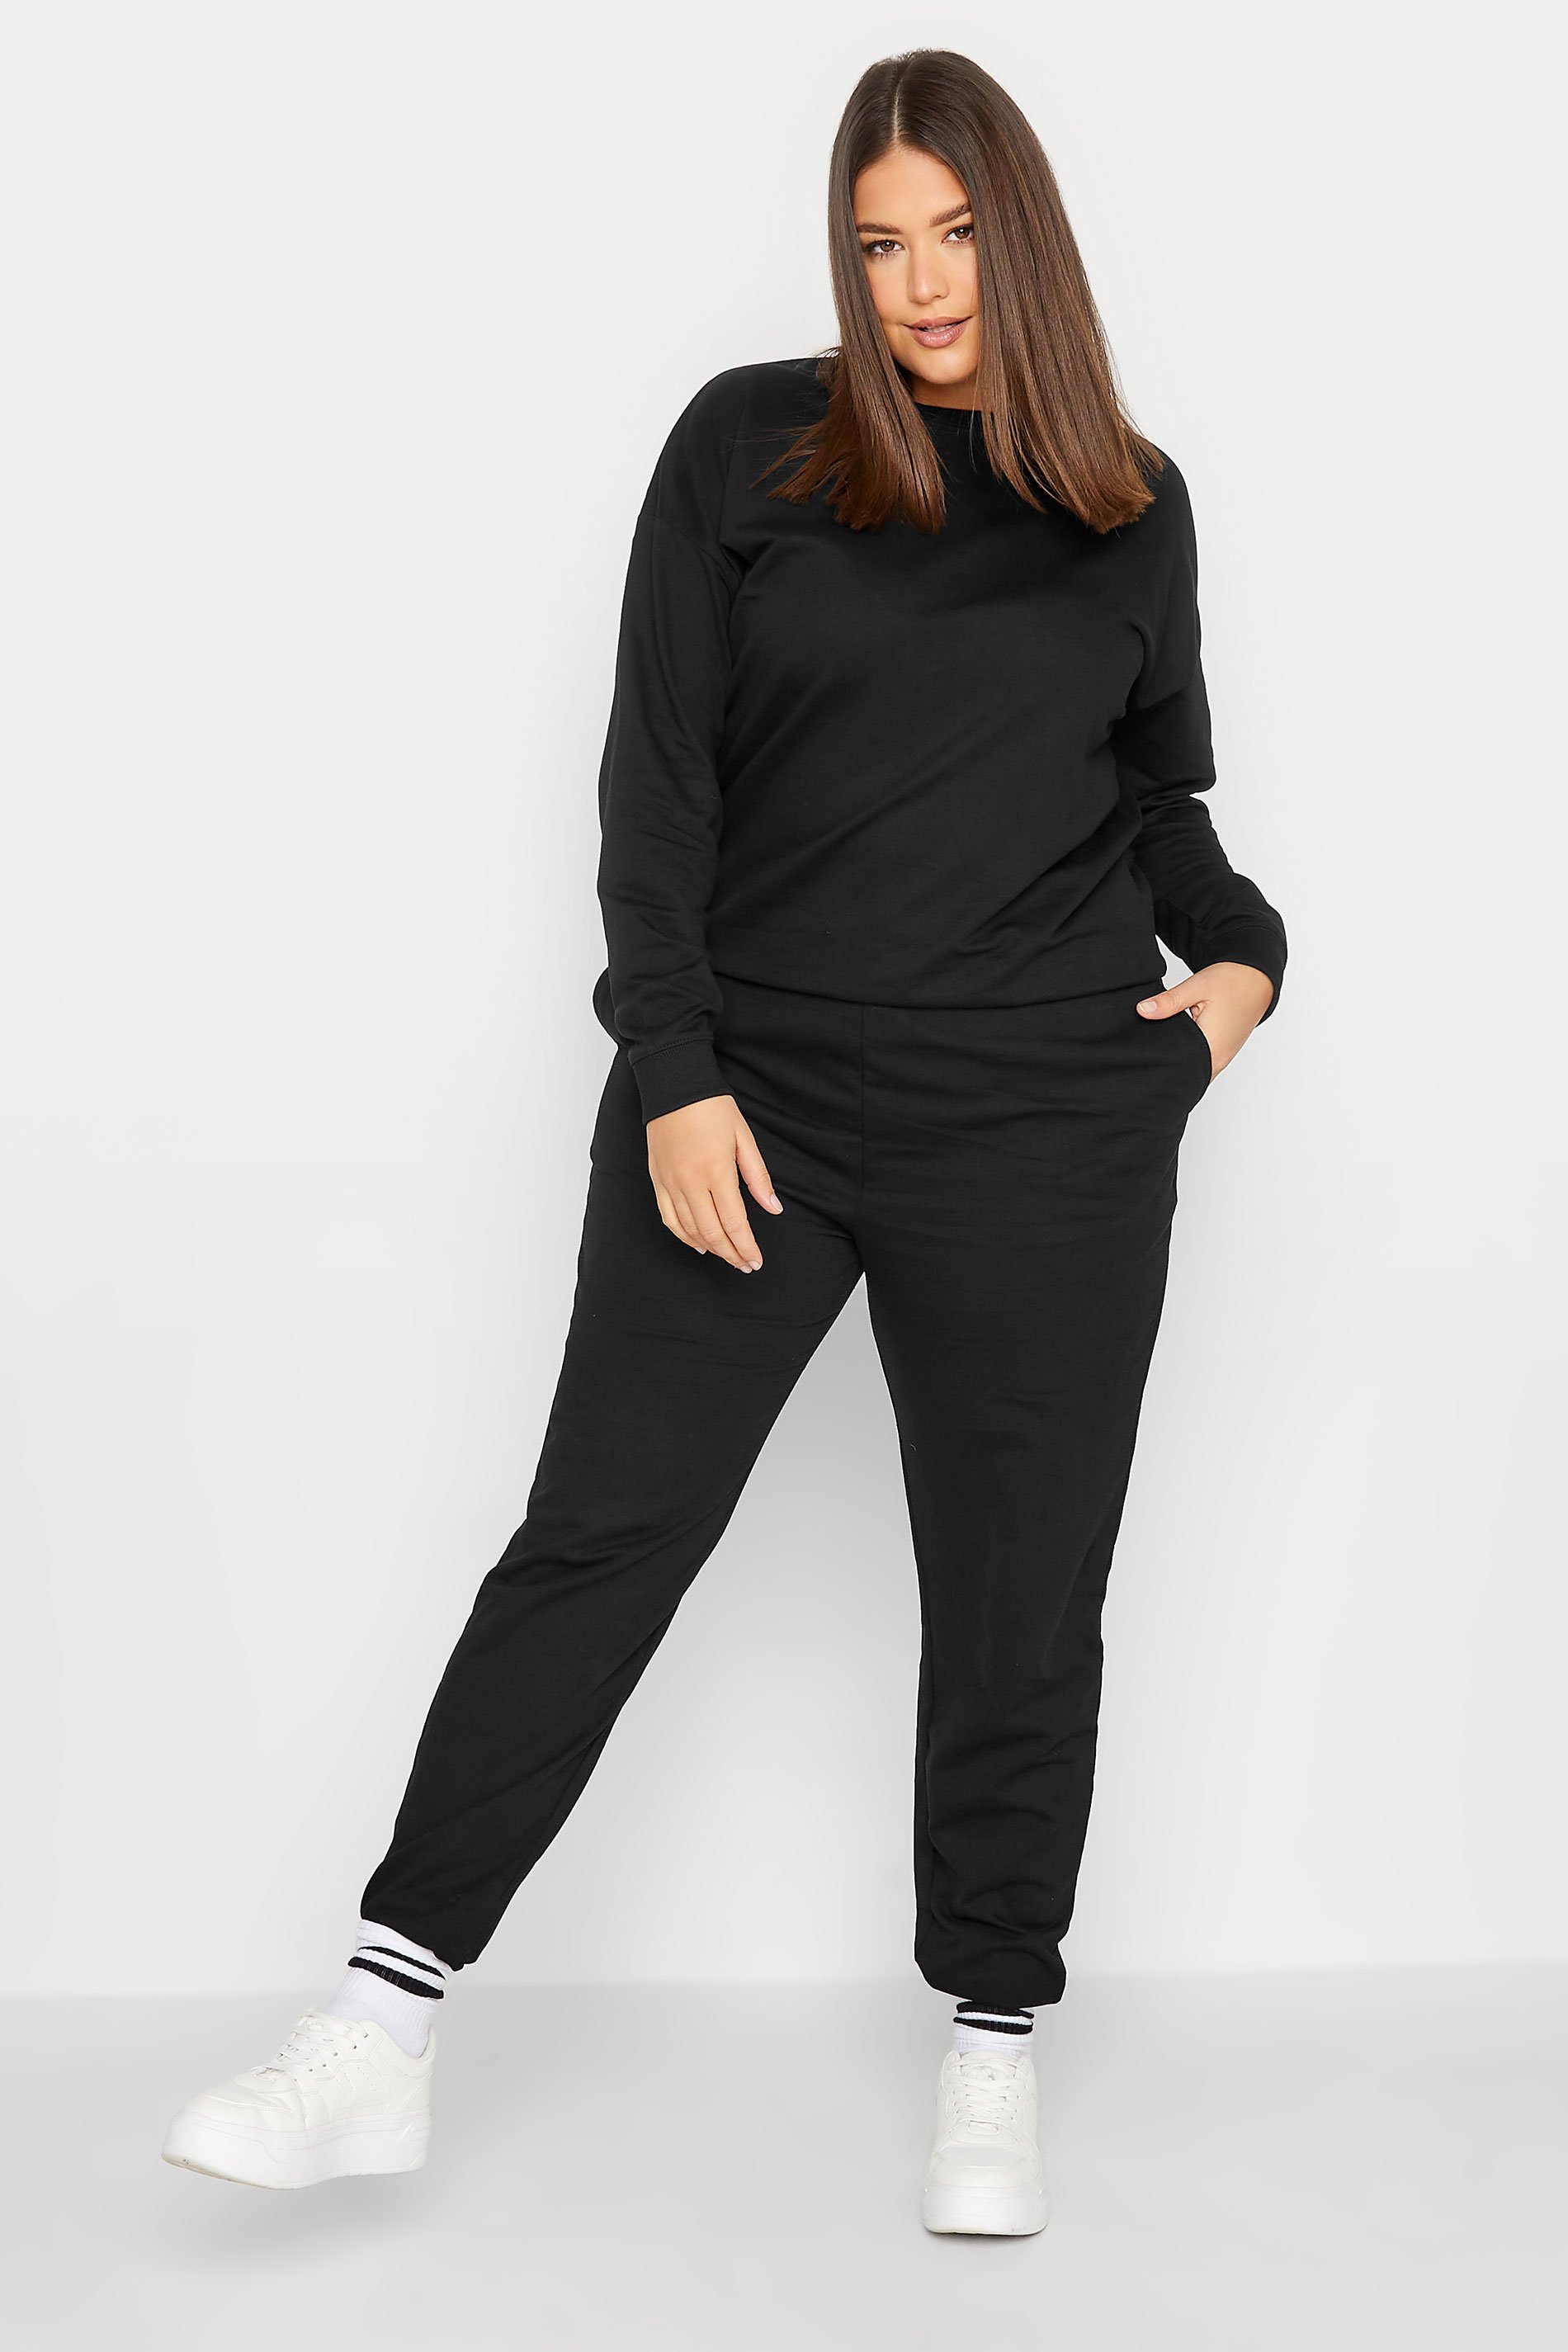 LTS Tall Black Long Sleeve Sweatshirt | Long Tall Sally  2